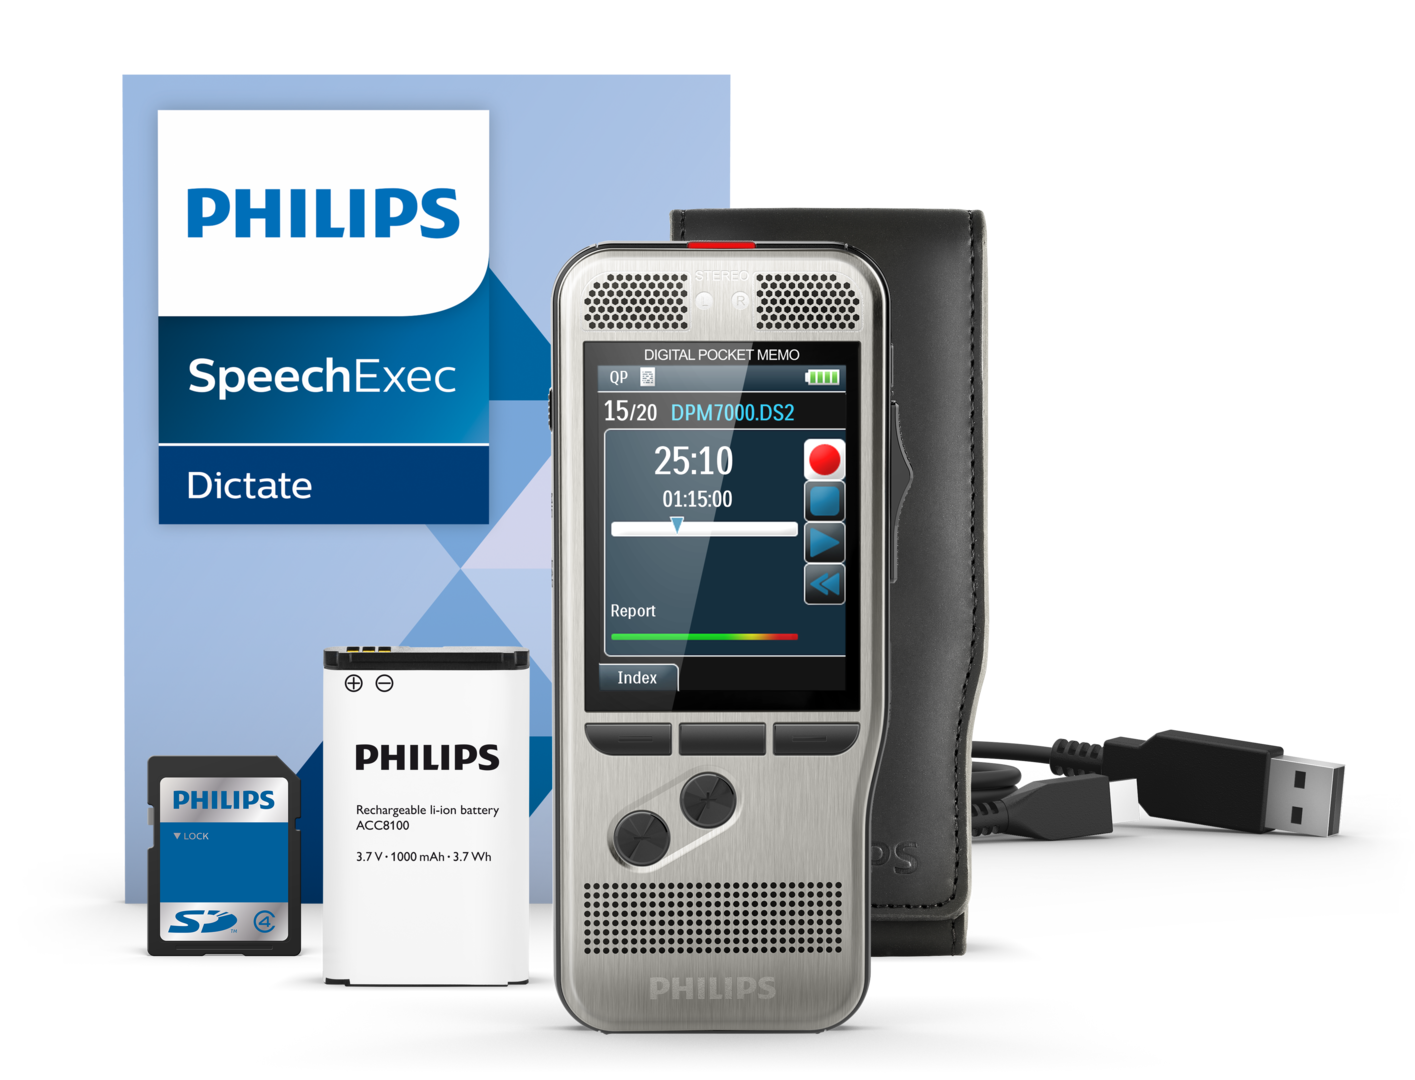 PHILIPS Diktiergerät Digitales Pocket Memo DPM7000